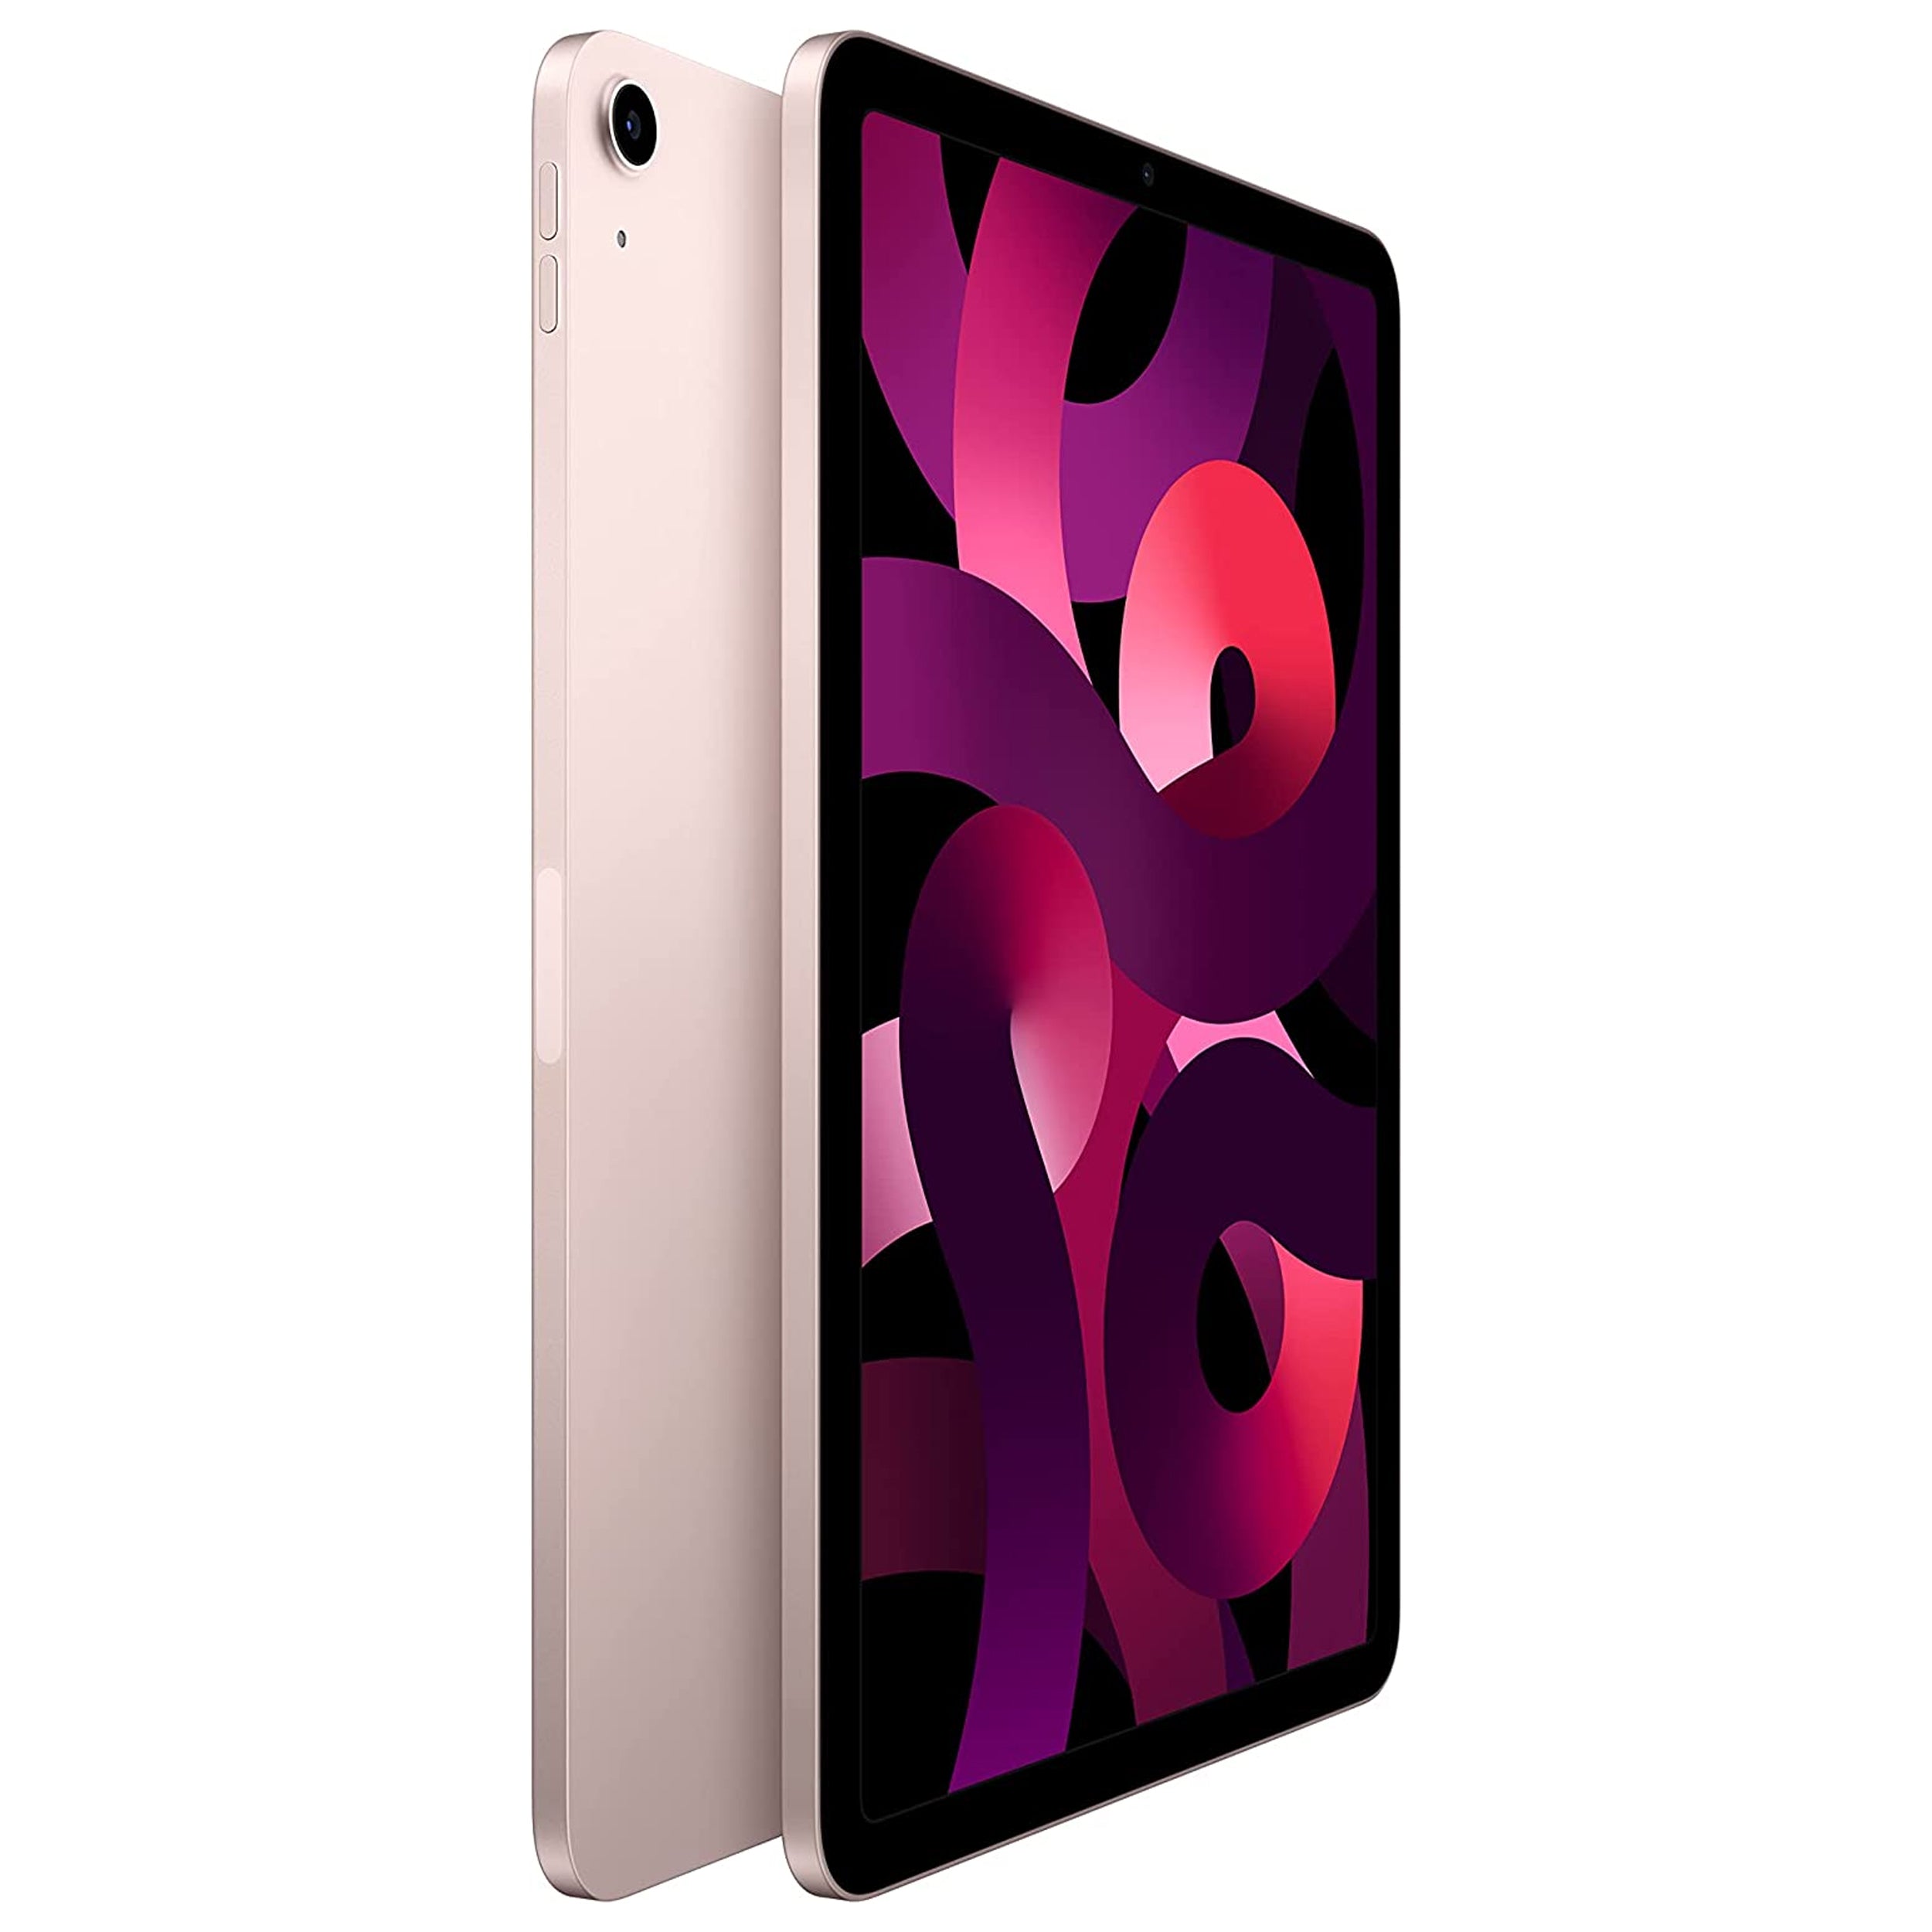 2022 Apple 10.9-inch iPad Air (Wi-Fi, 64GB) - Pink (5th Generation)